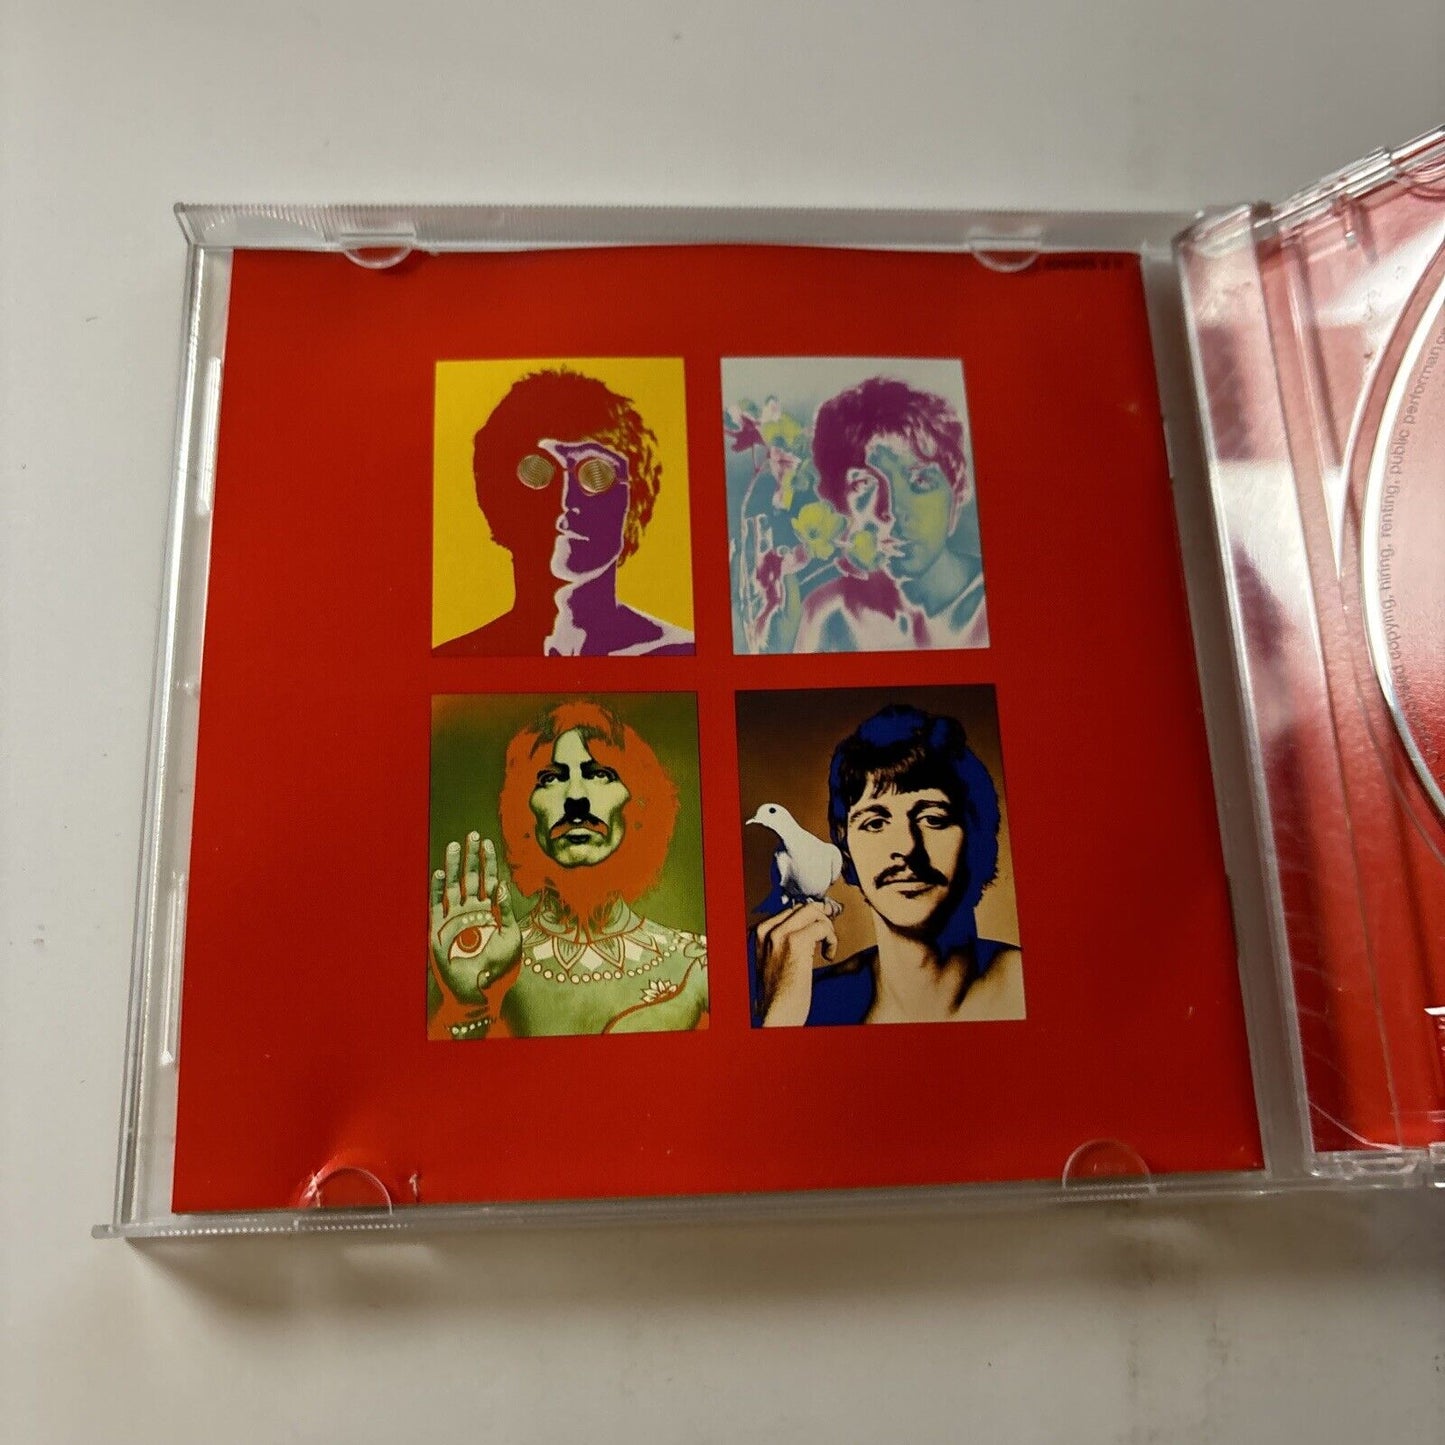 The Beatles - 1 (CD, 2000)